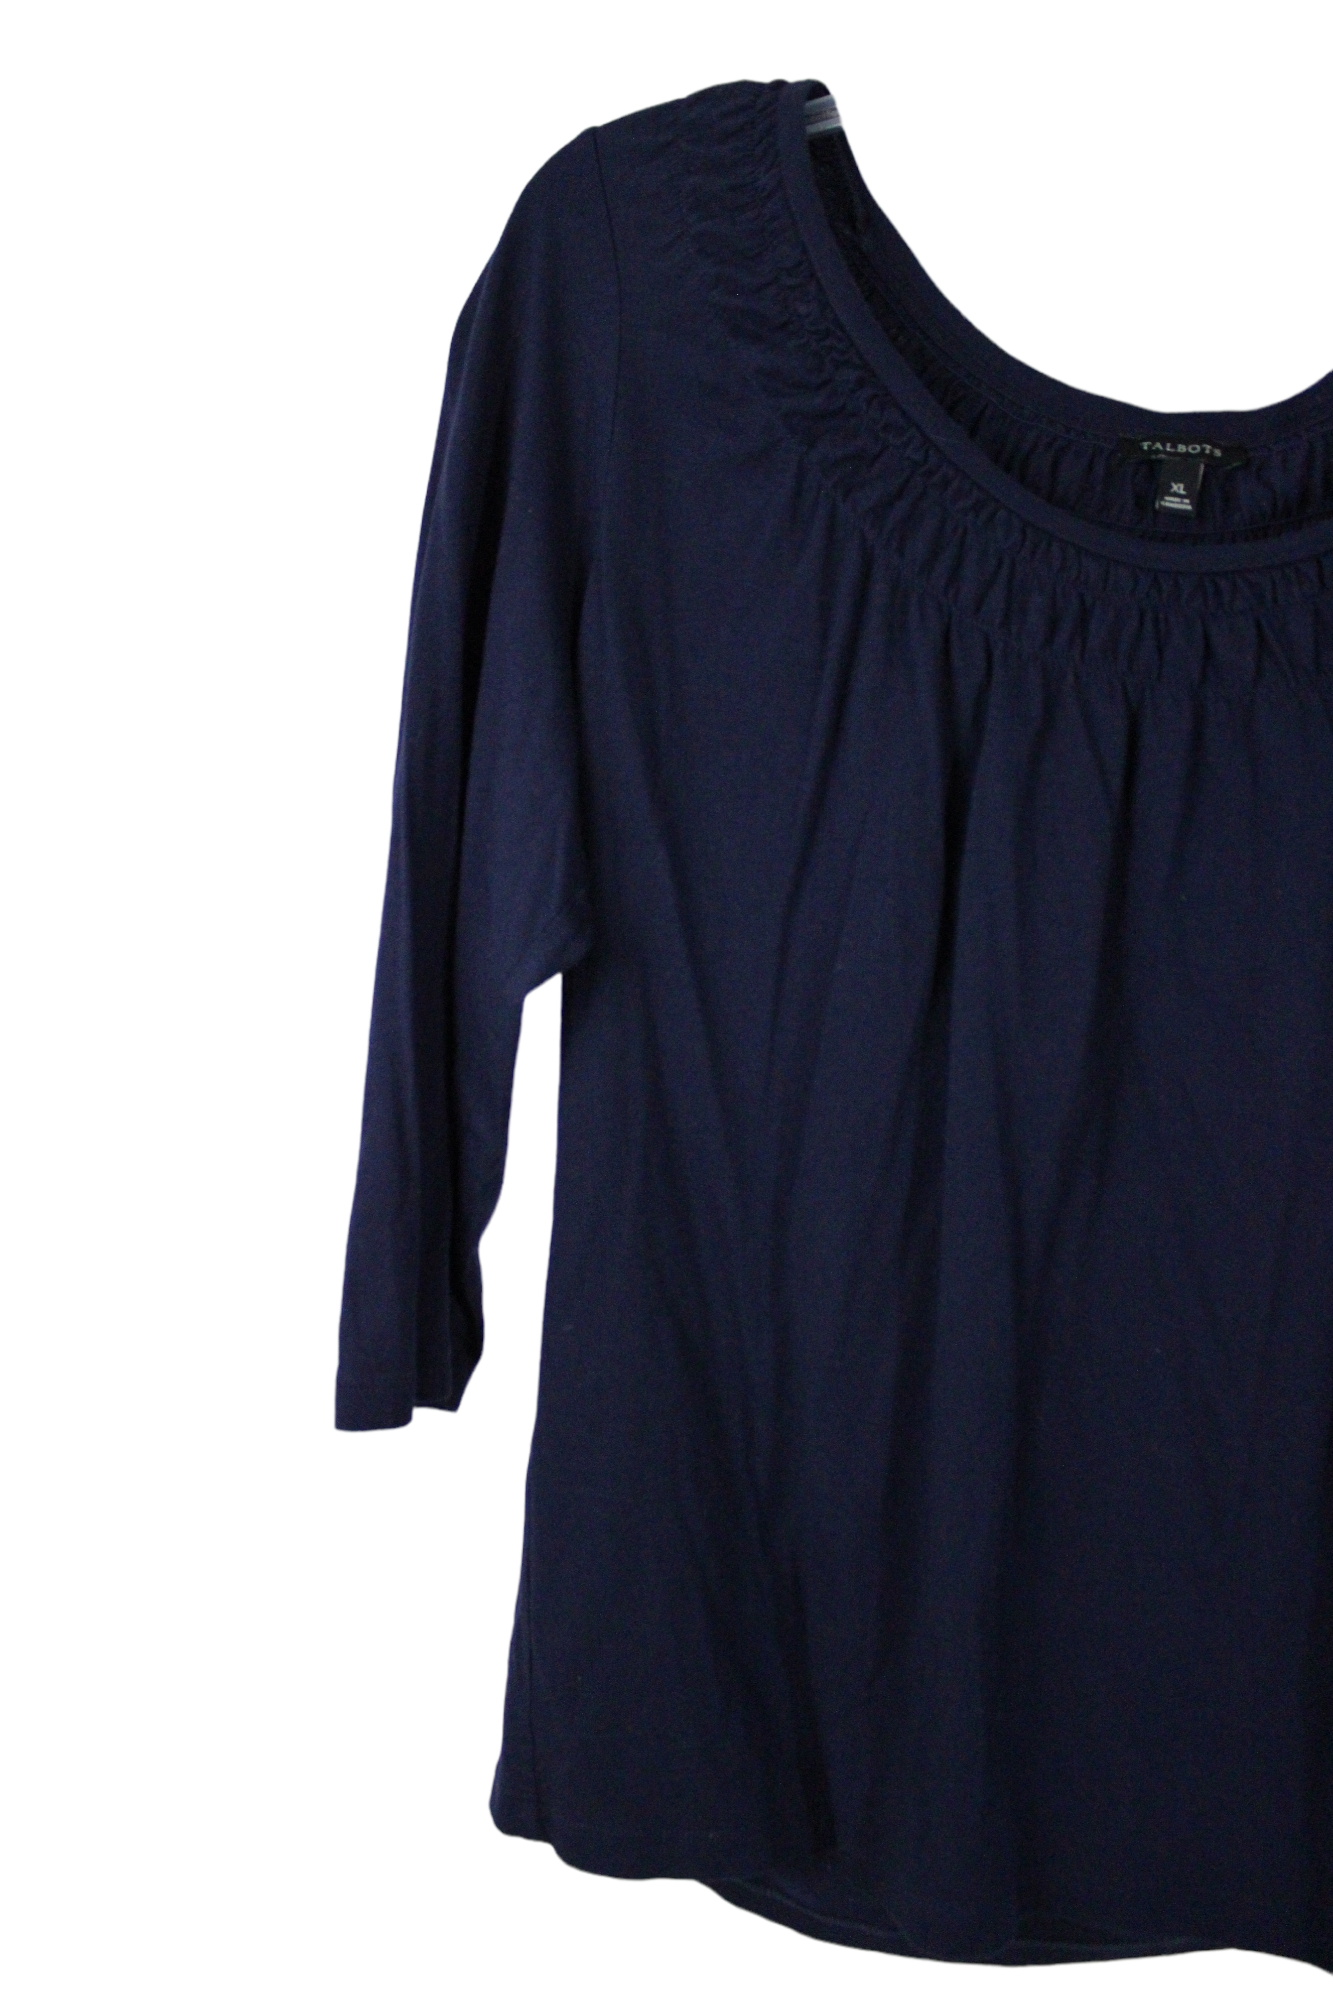 Talbots Top Womens XL Navy Blue 100% Pima Cotton Tee Shirt